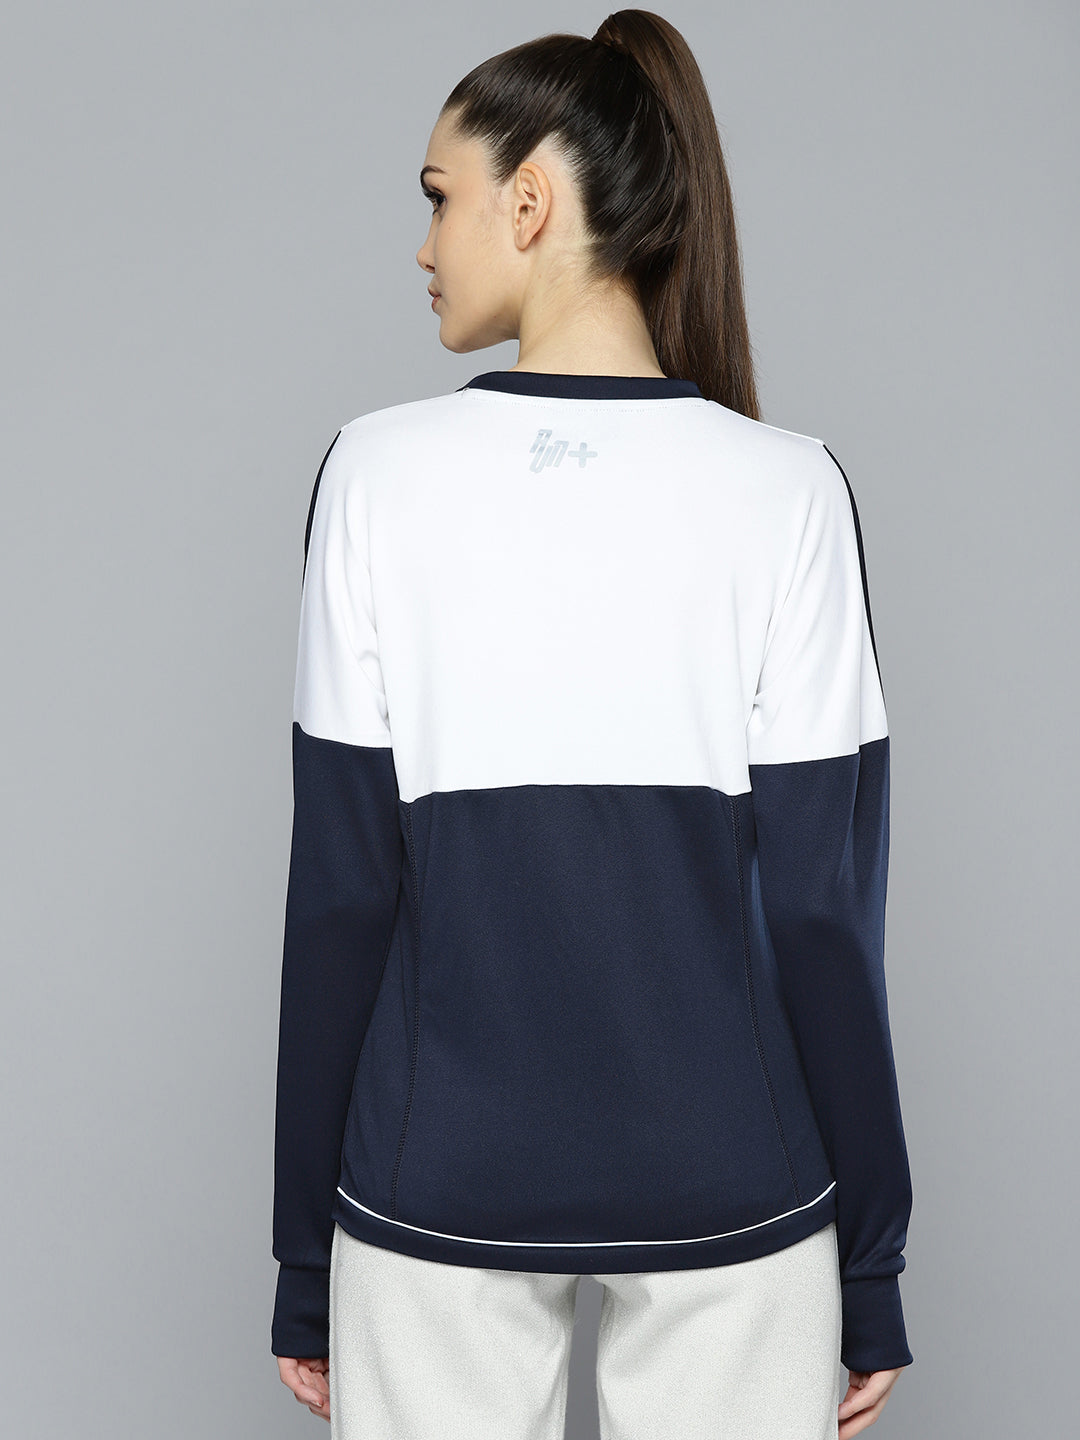 Alcis Women White and Navy Blue Brand Logo Printed Sweatshirt